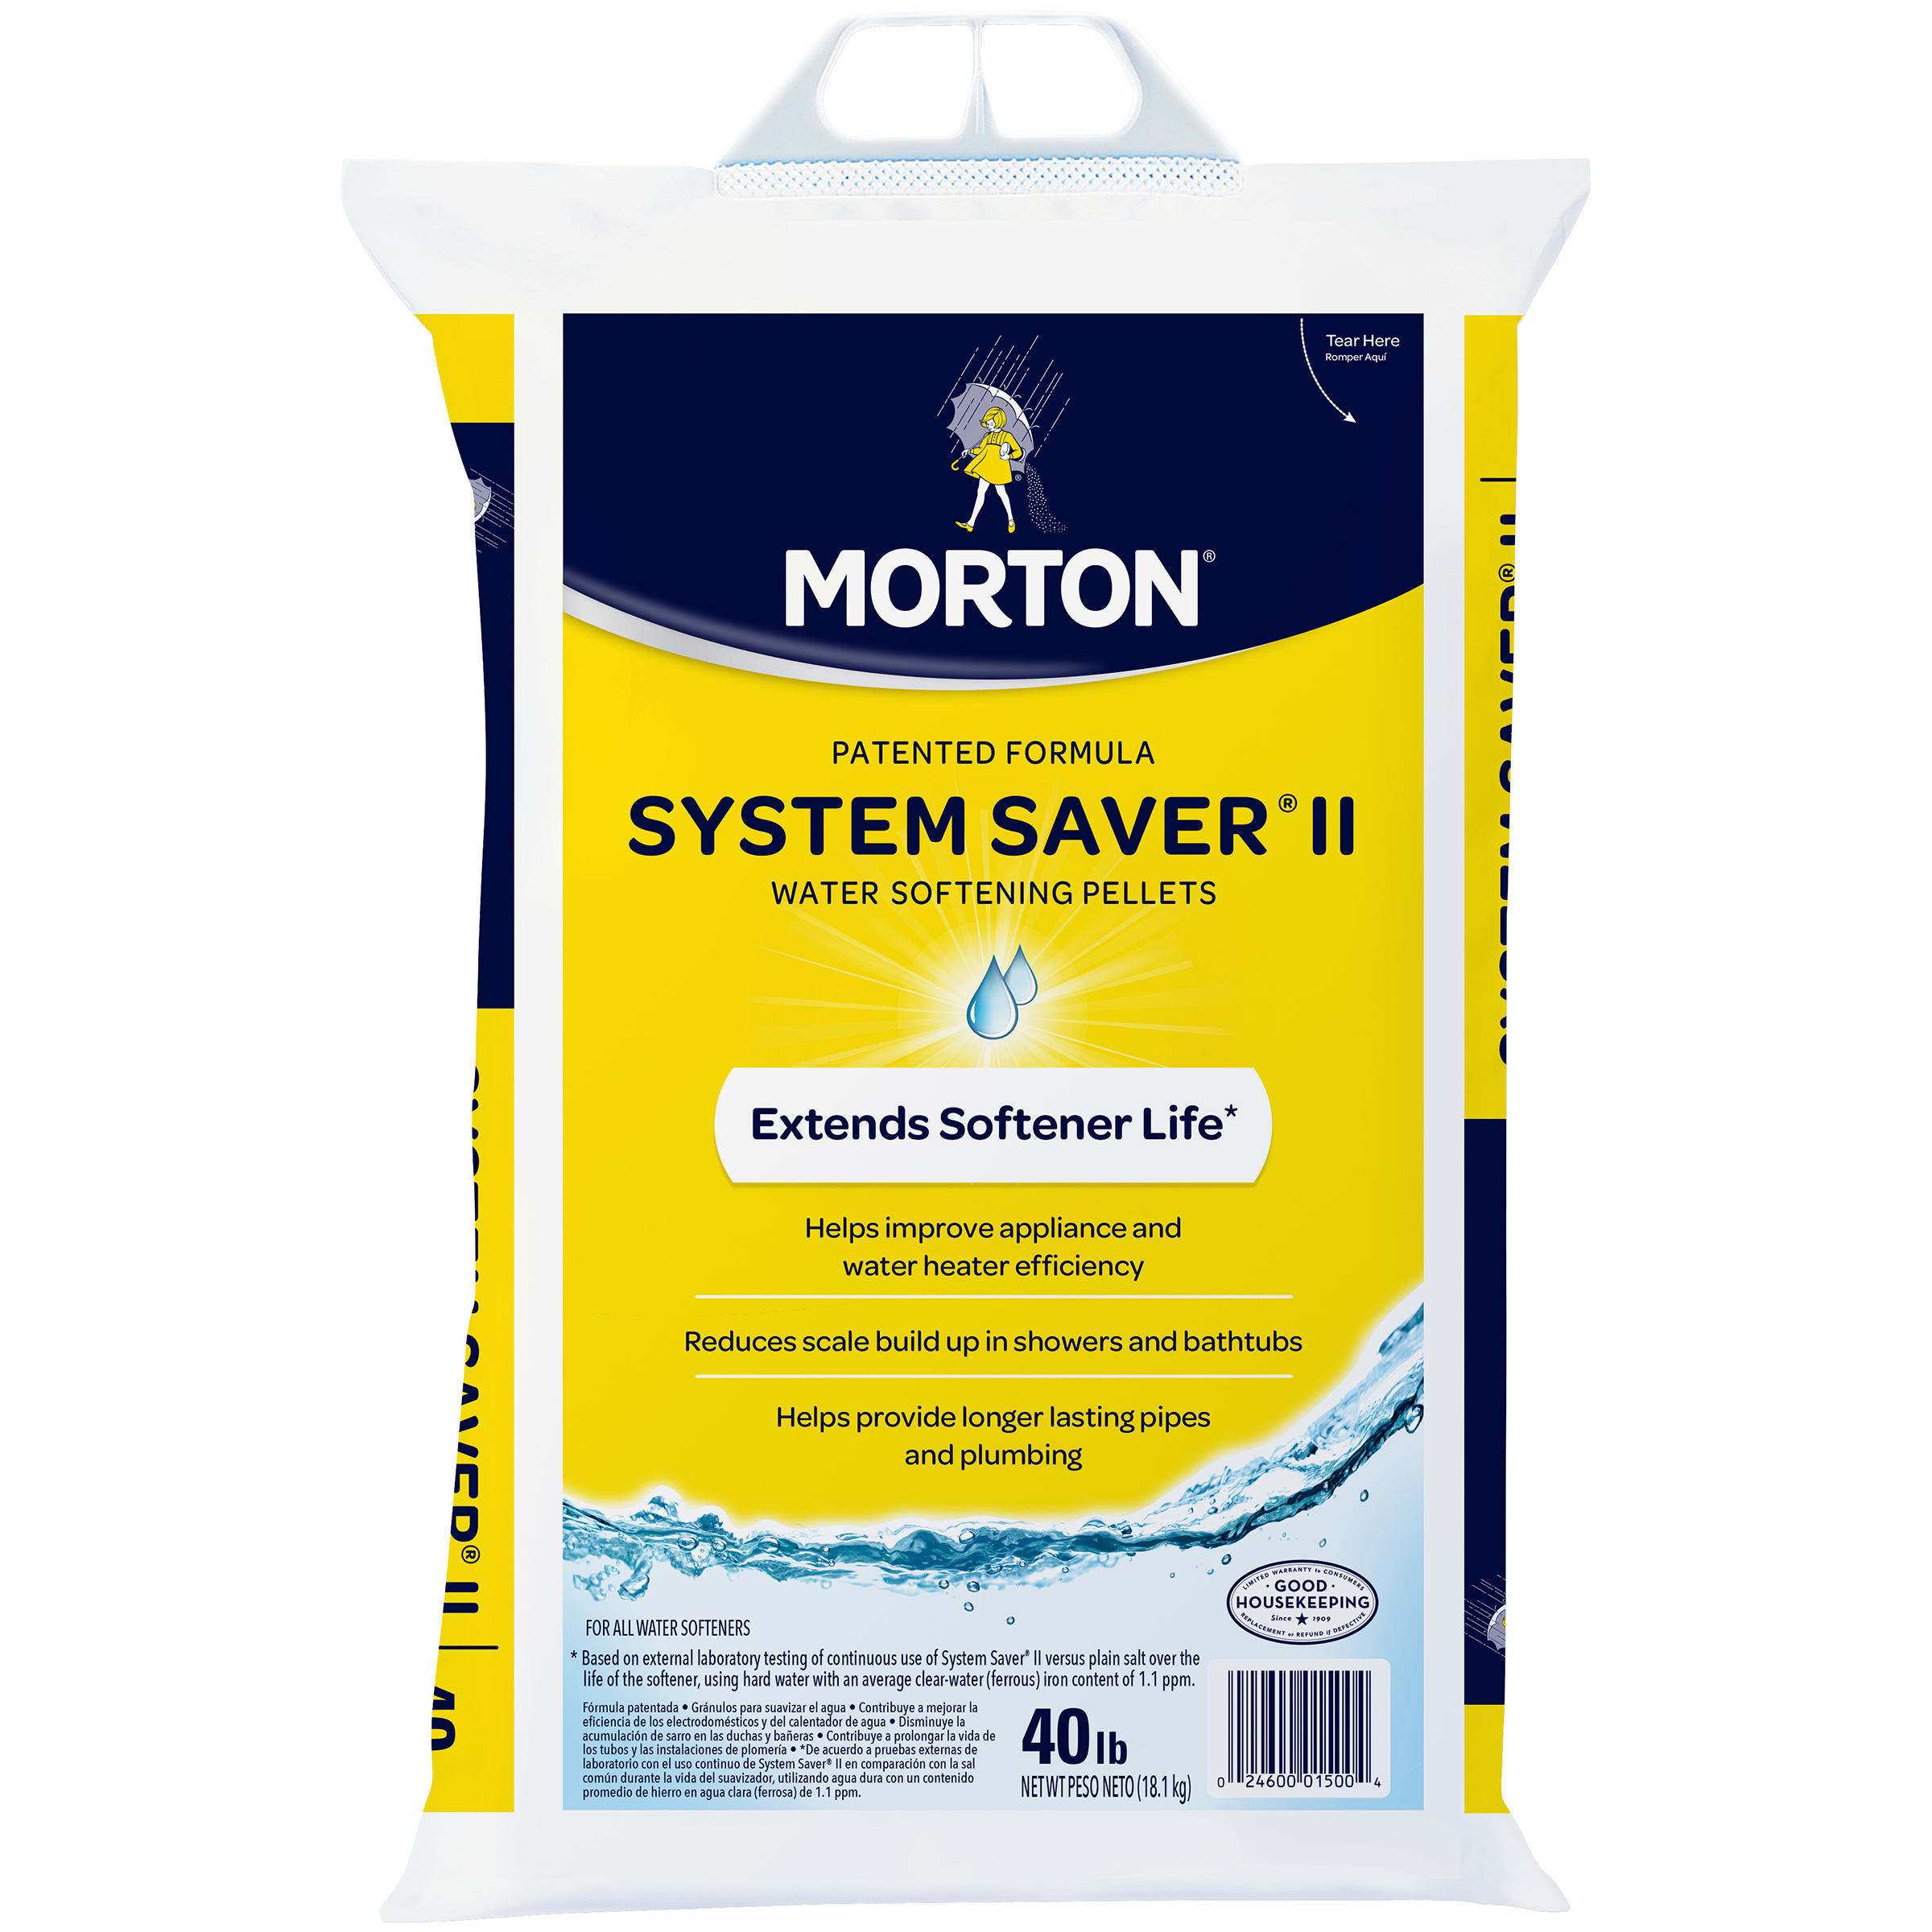 Morton 40 lb Water Softener Salt Only $3.99! Also for Melting Ice!